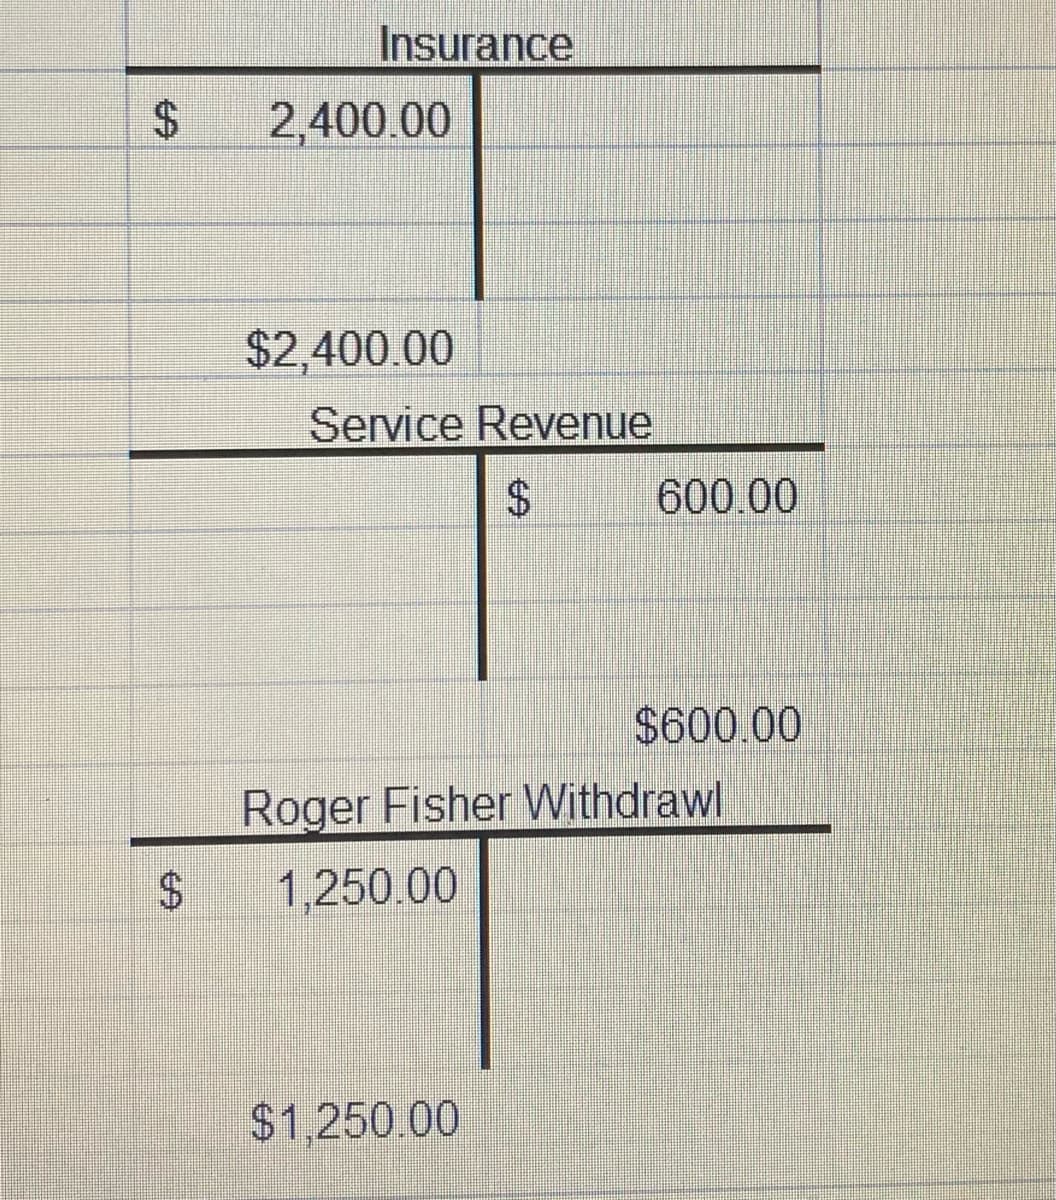 $
$
Insurance
2,400.00
$2,400.00
Service Revenue
$
600.00
$1,250.00
$600.00
Roger Fisher Withdrawl
1,250.00